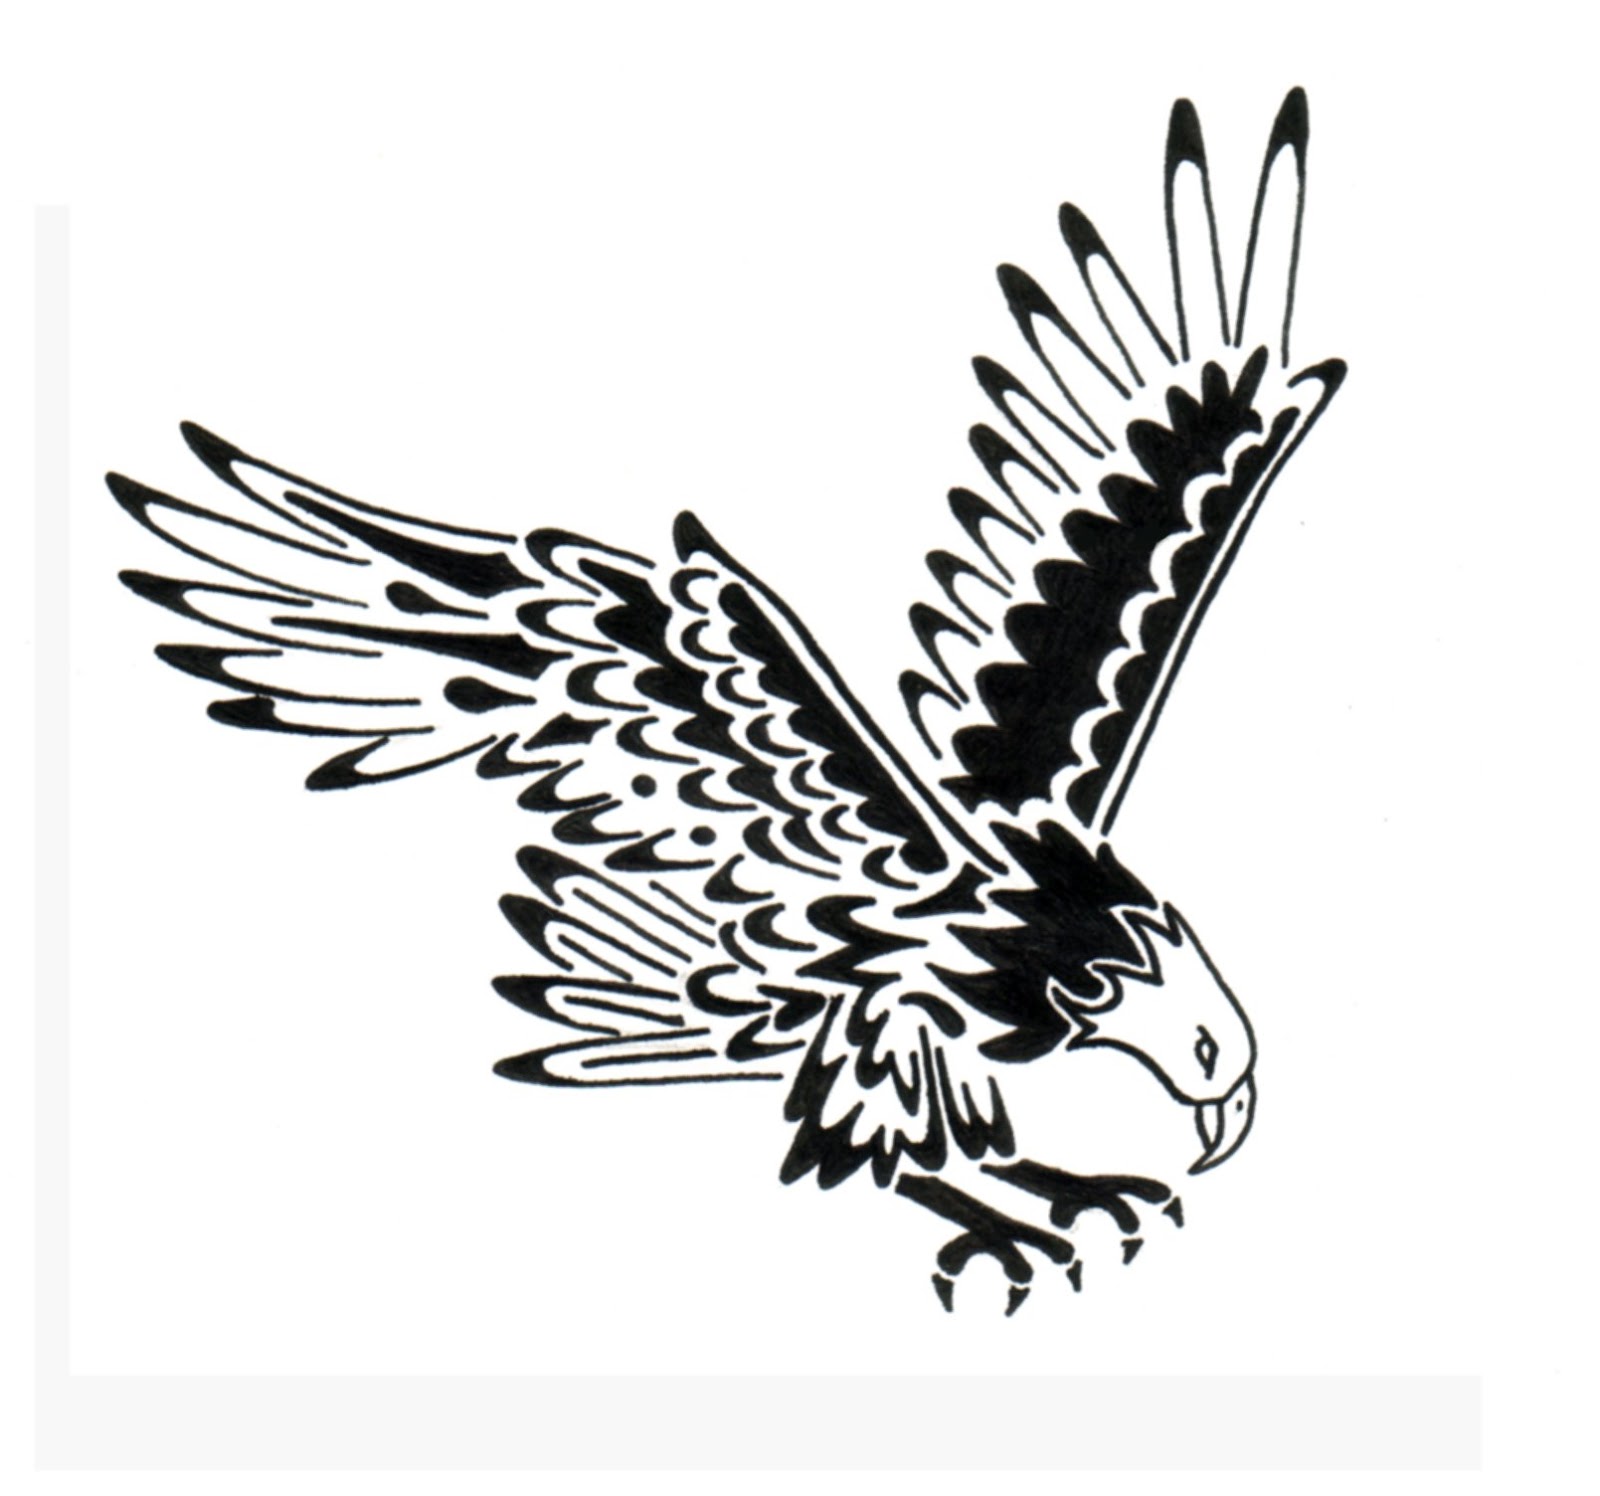 Black Tribal Flying Eagle Tattoo Design